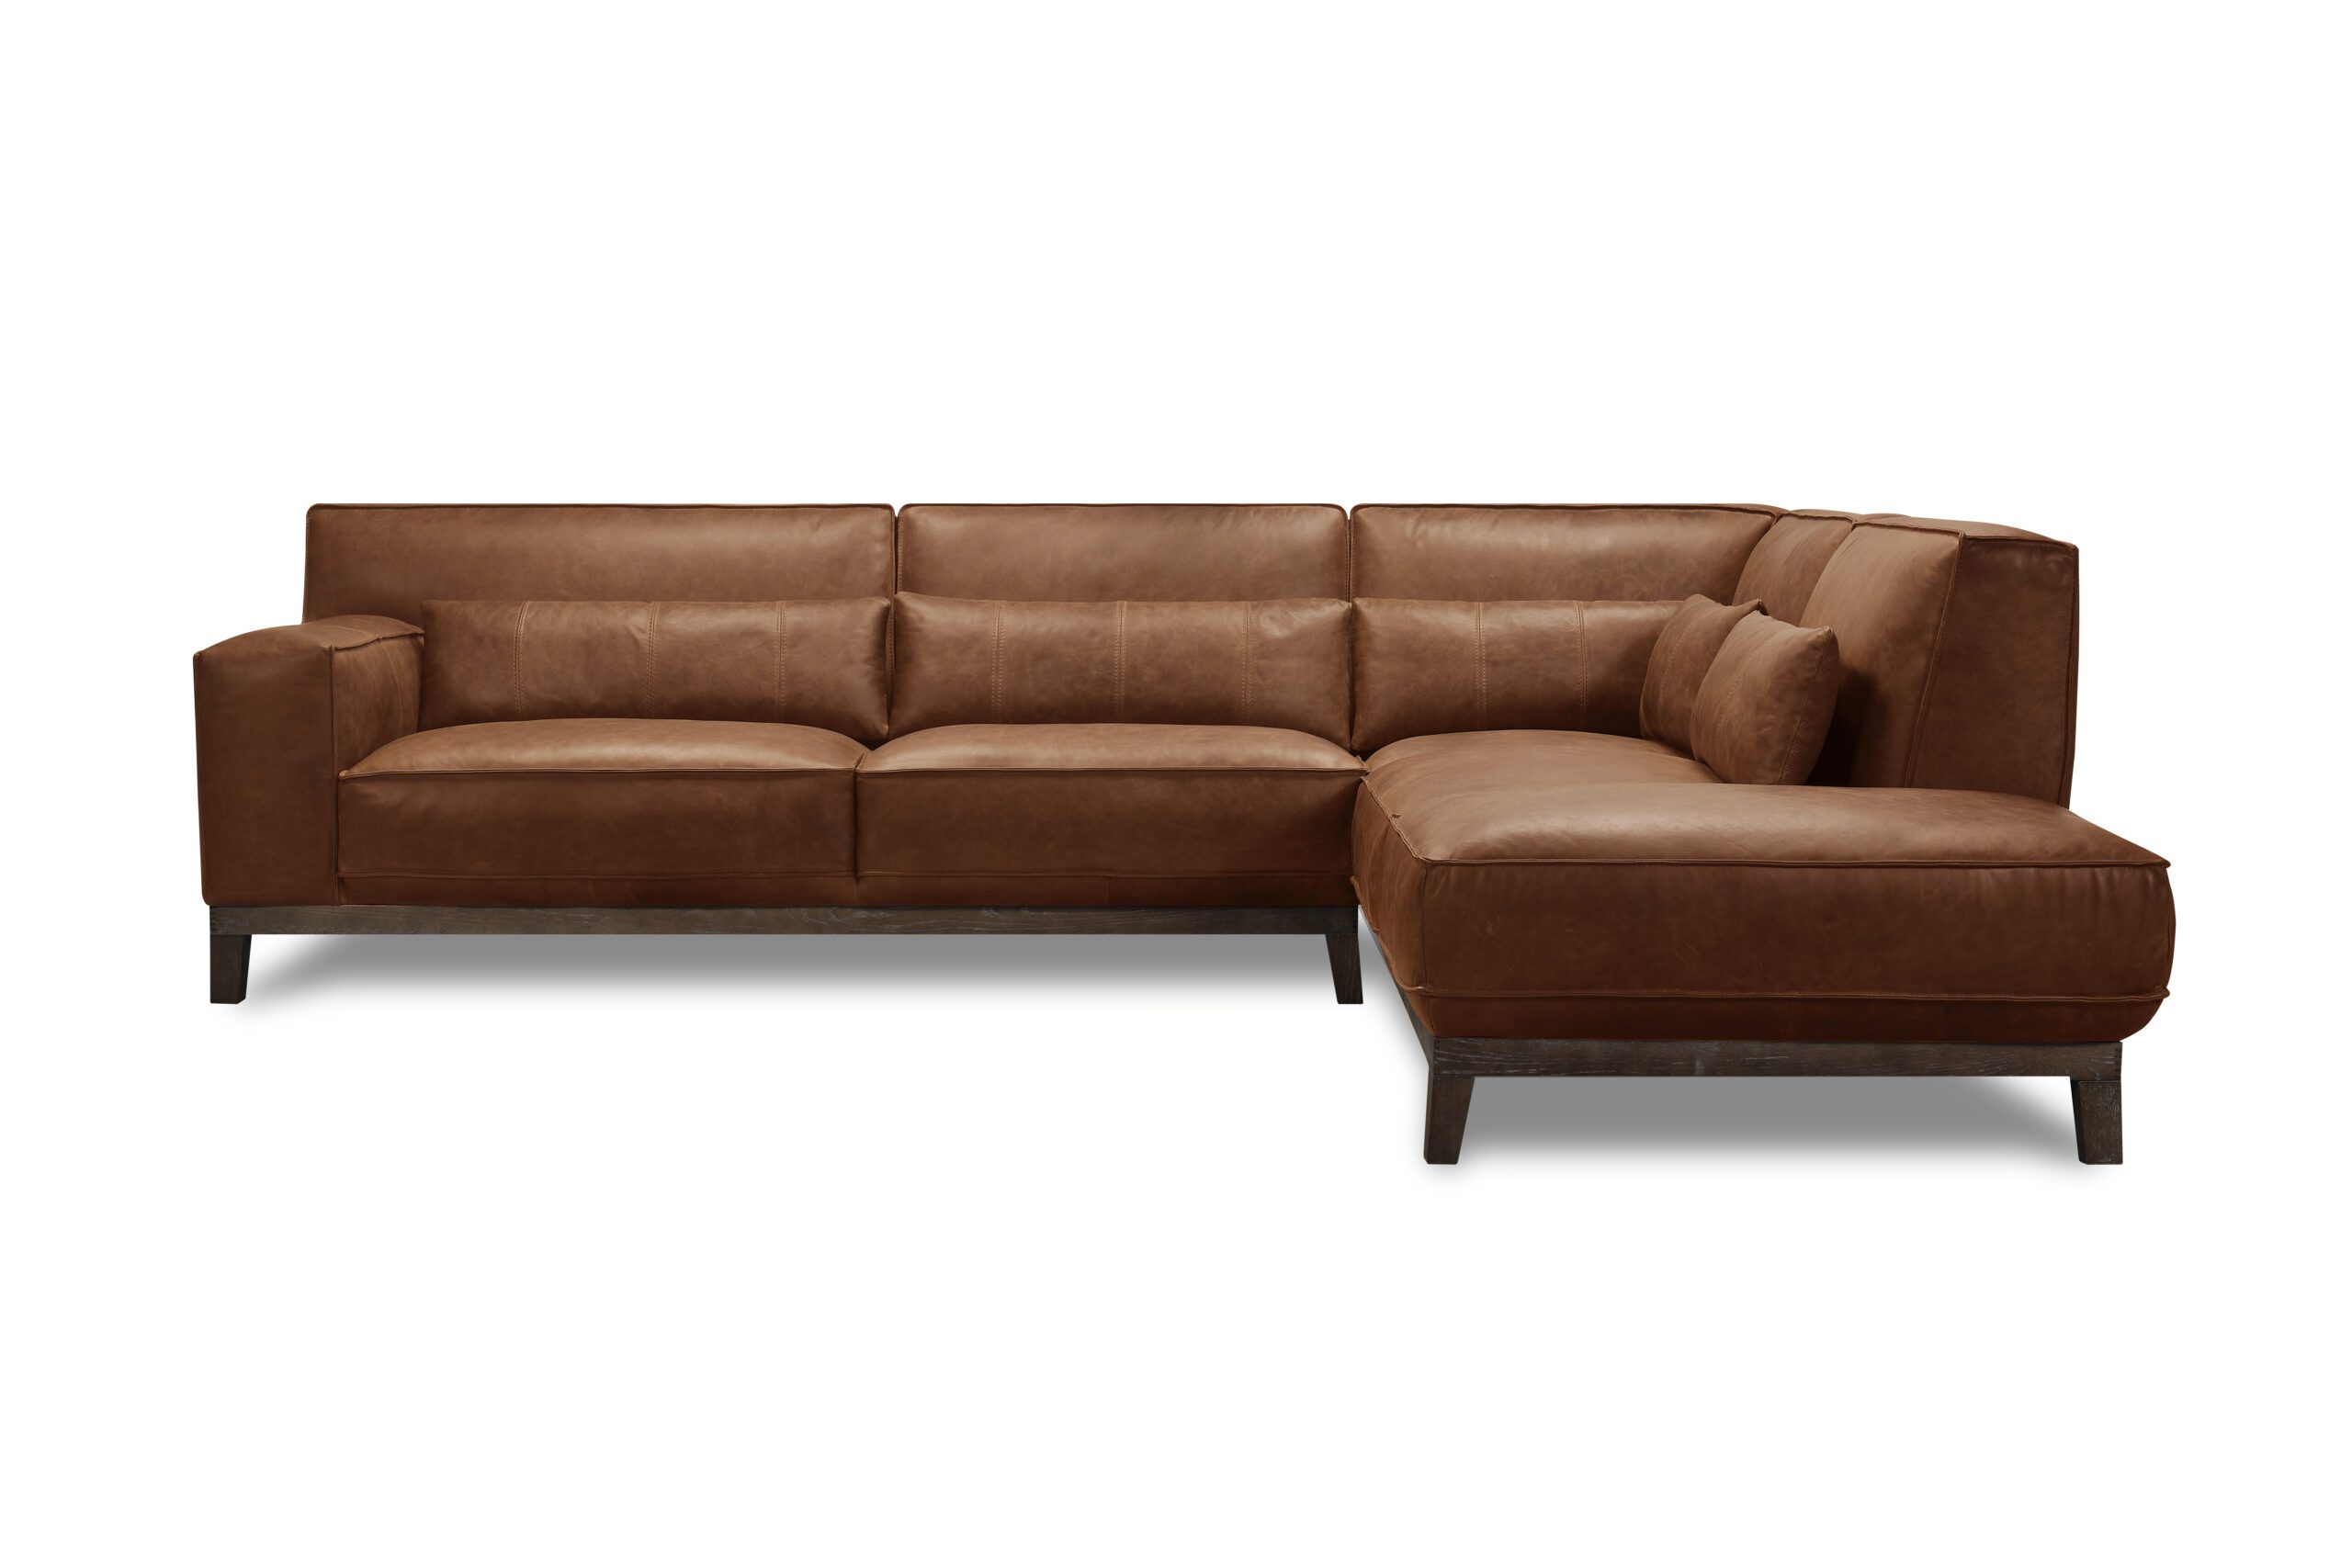 Canada Boca bright brown sofa section